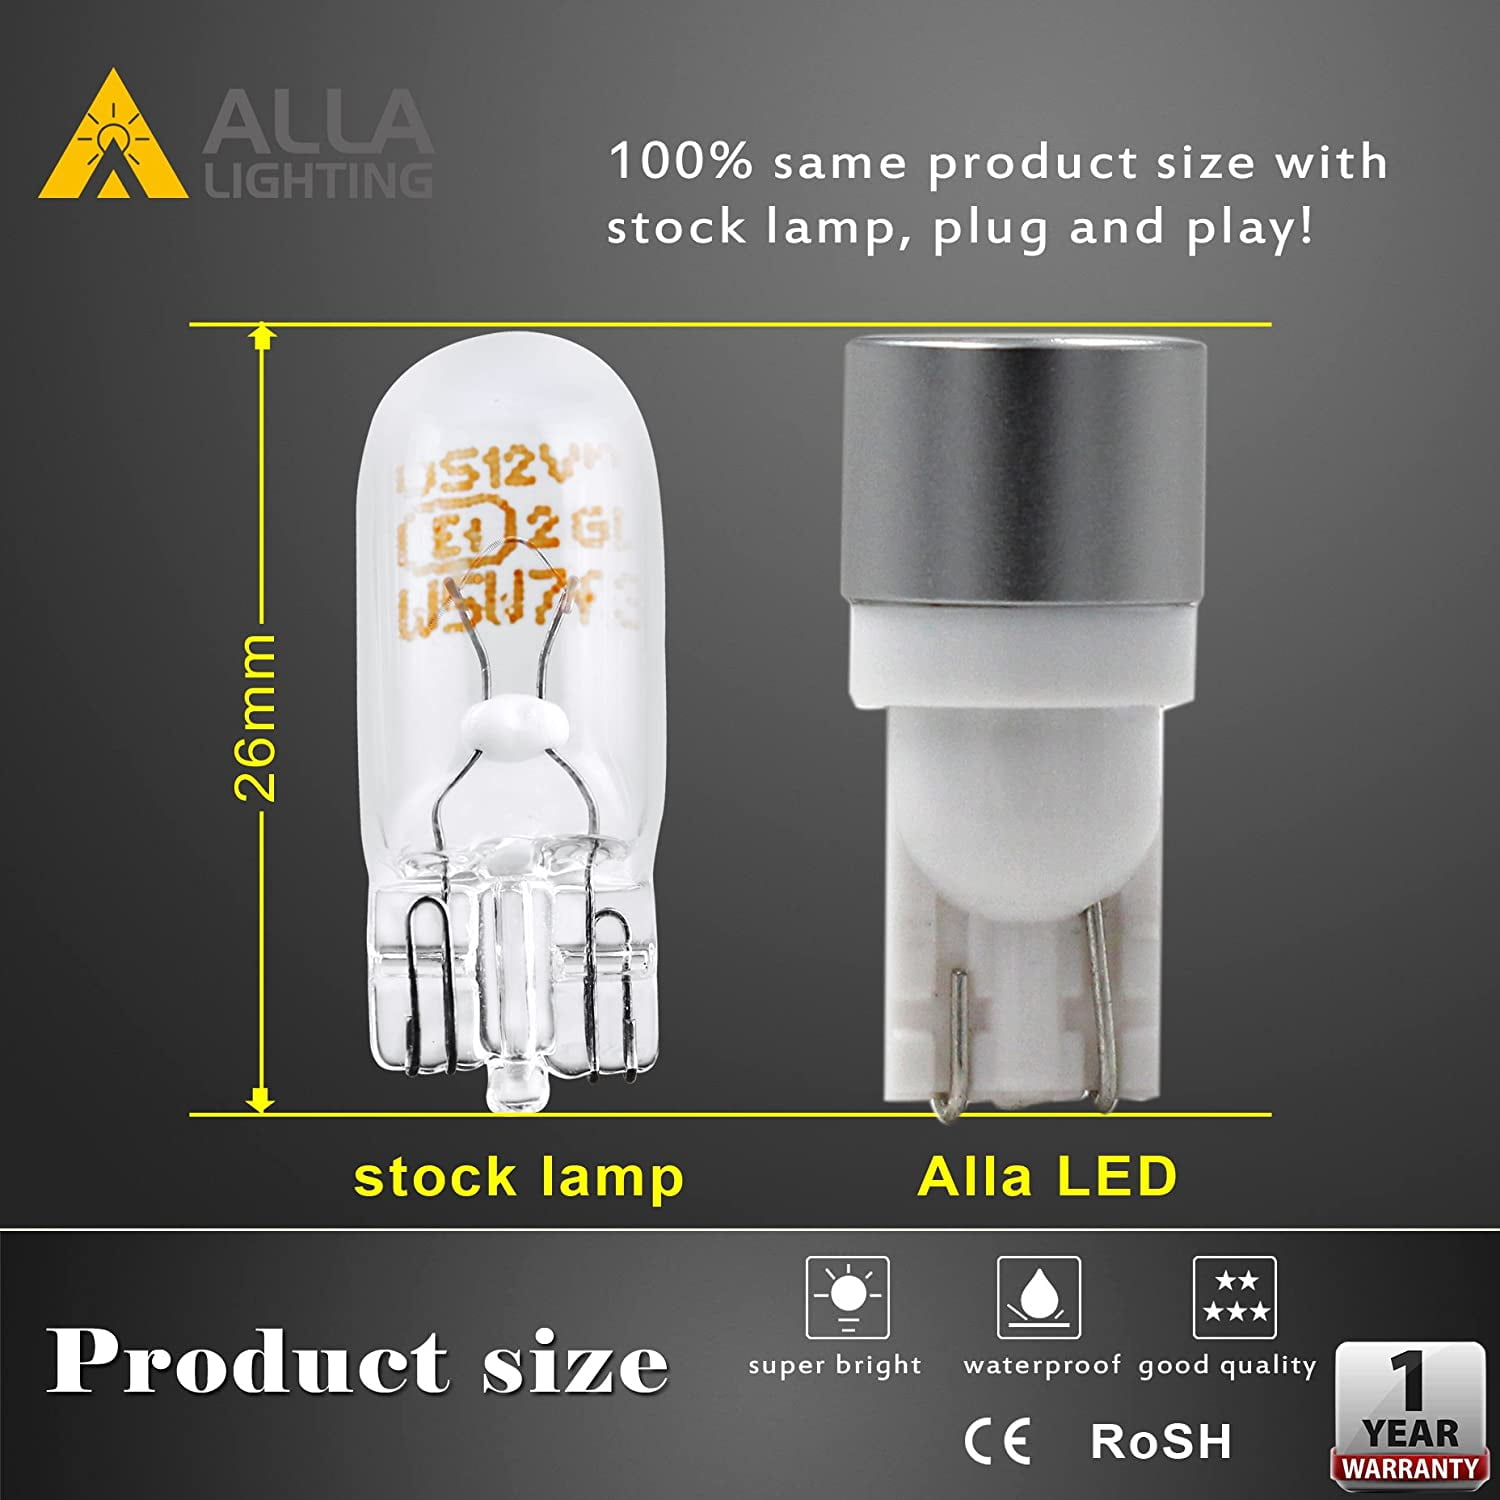 Alla Lighting 194 Led Bulbs Bright T10